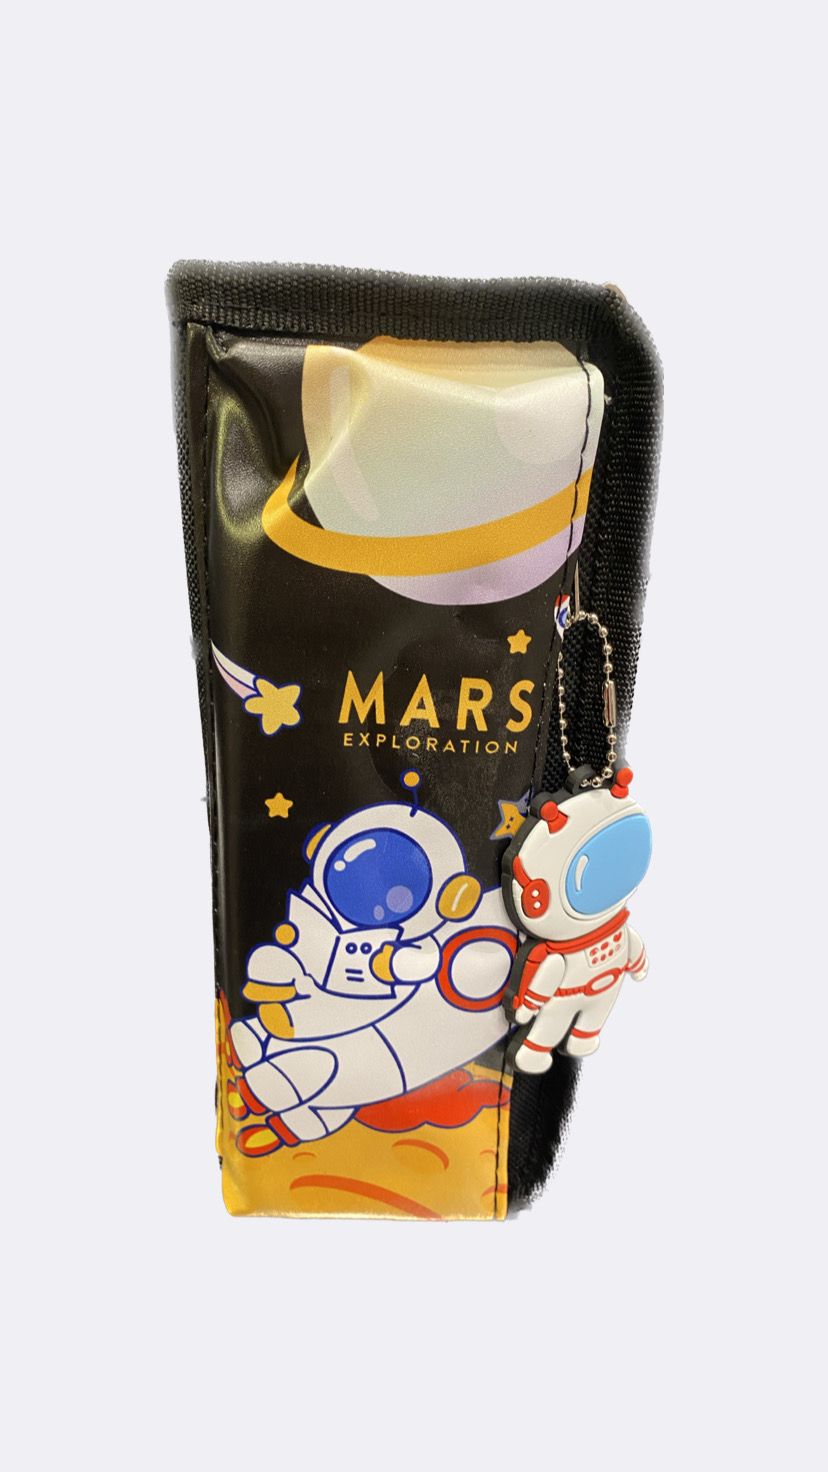 Mars Exploration Pencil Case